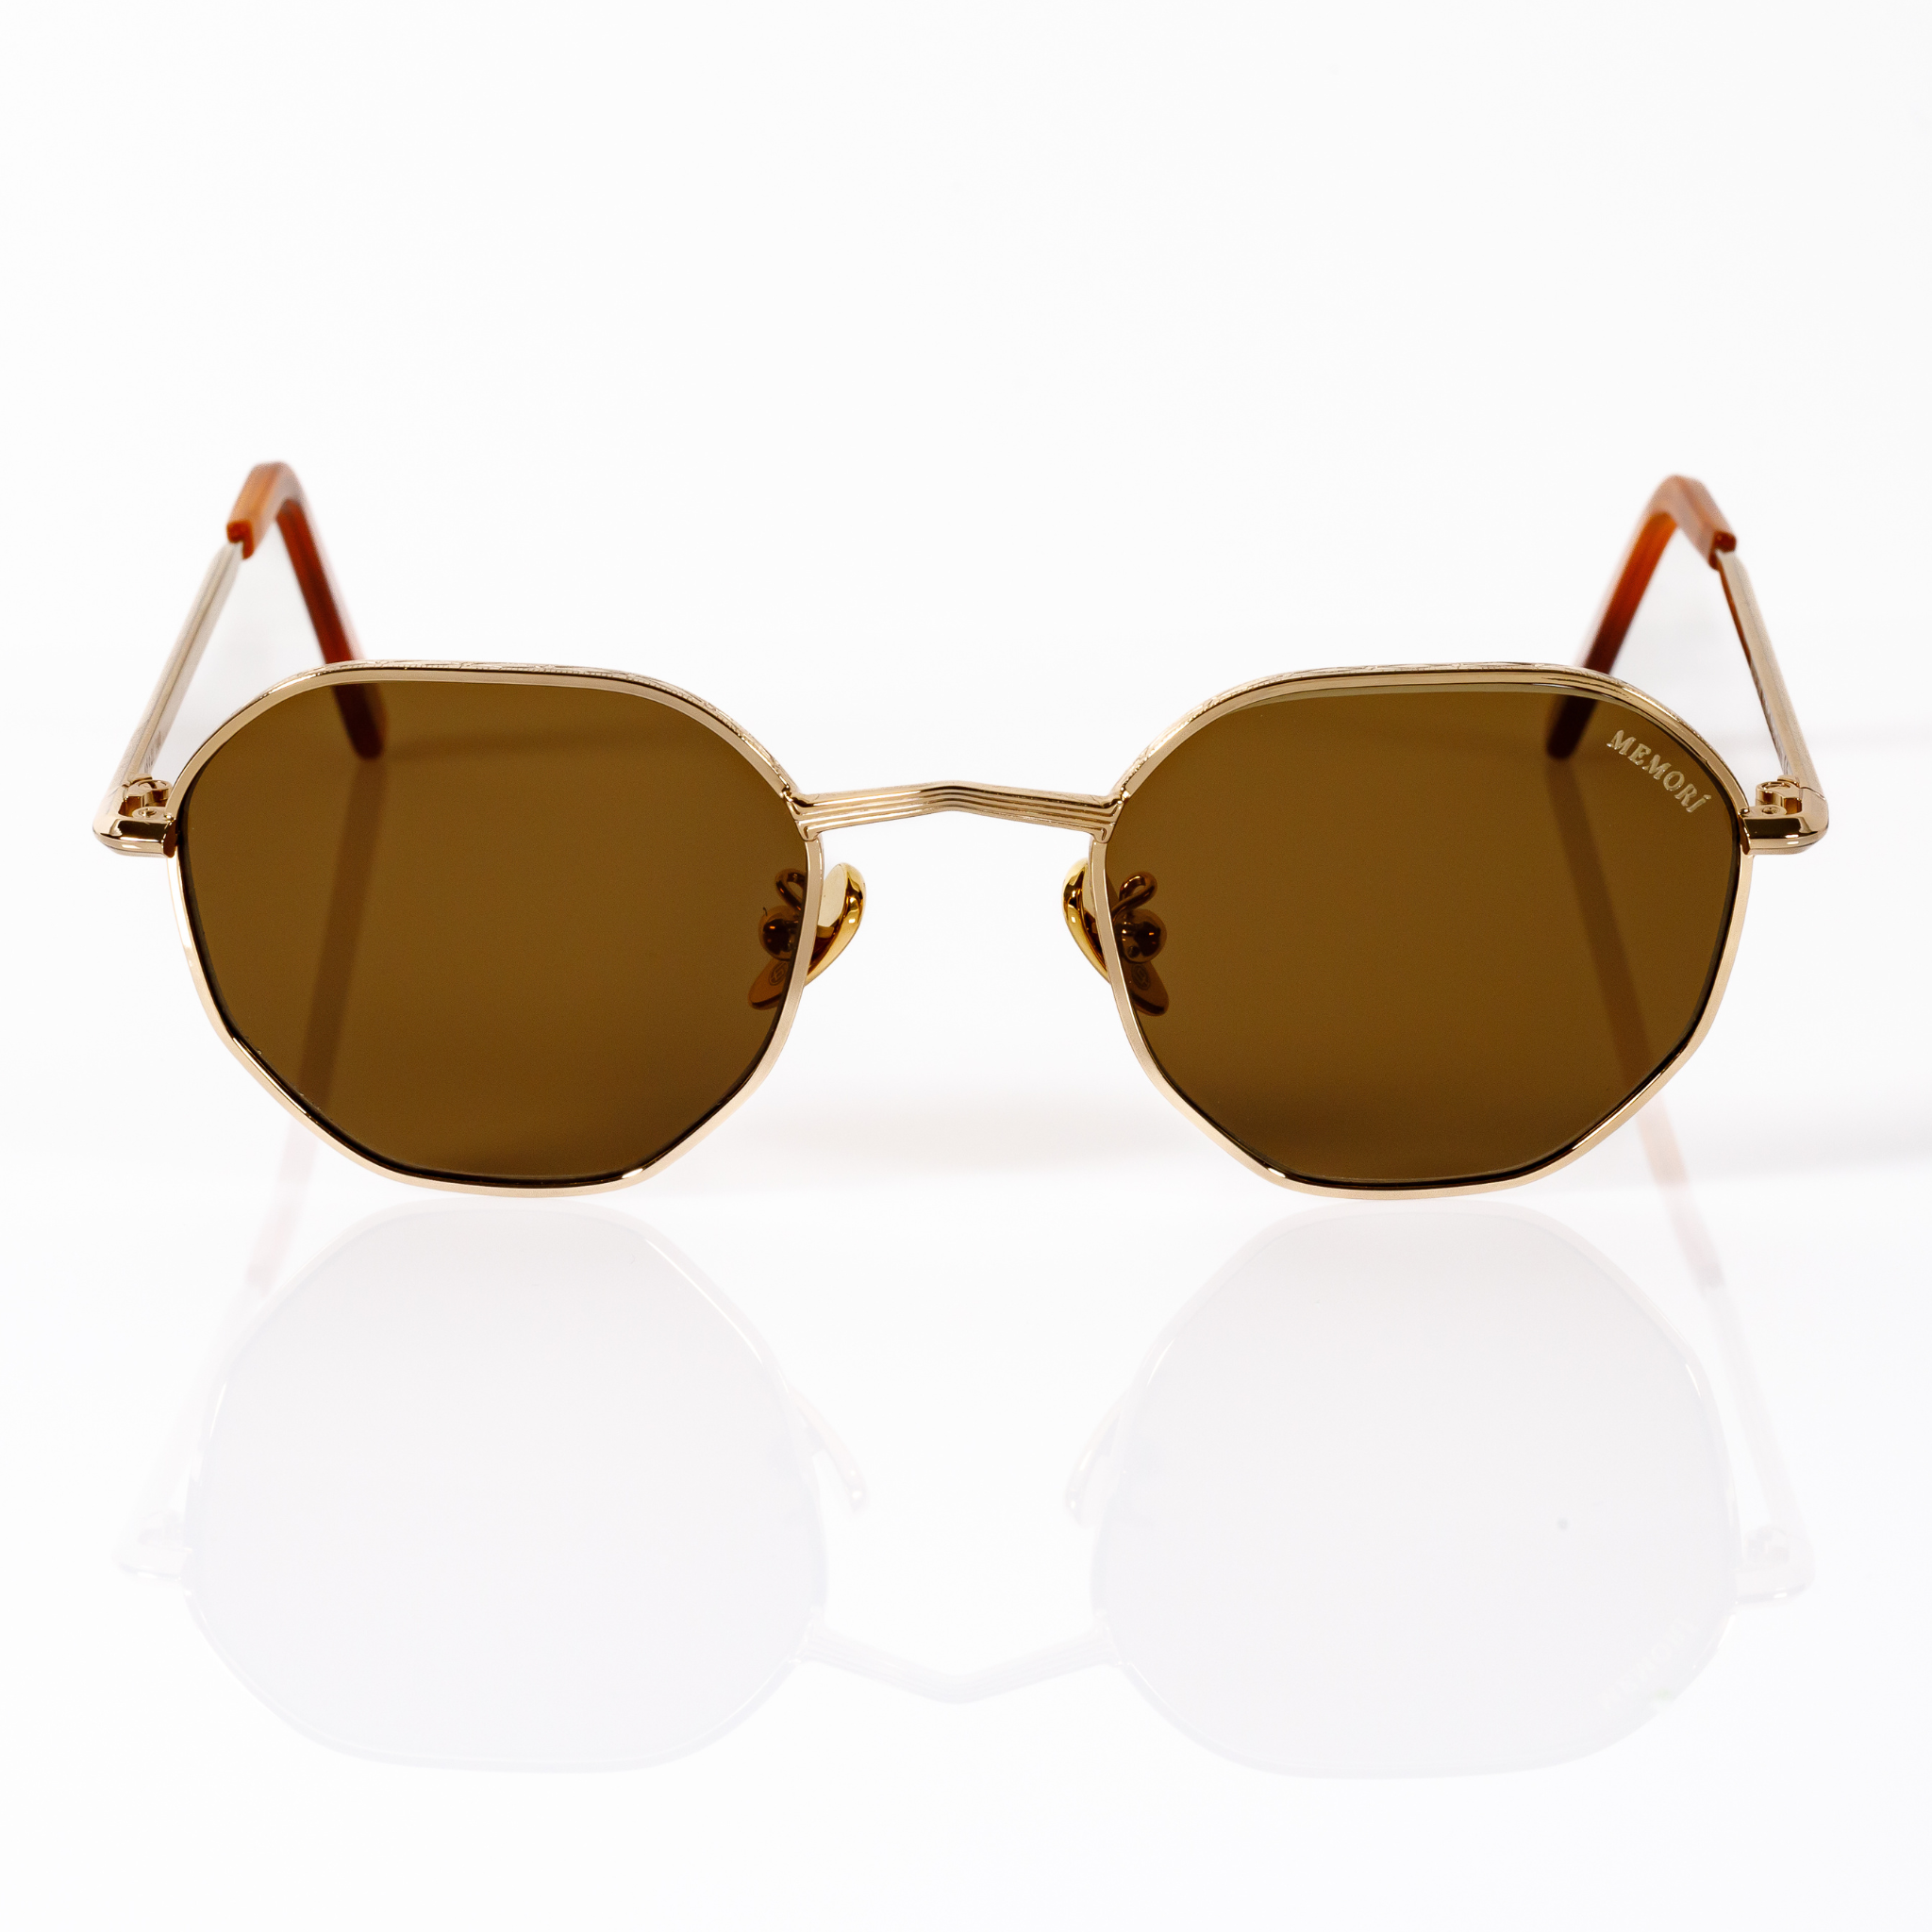 Polarized sunglasses for small faces gold metal men women front view showcases V shaped nose bridge design detail